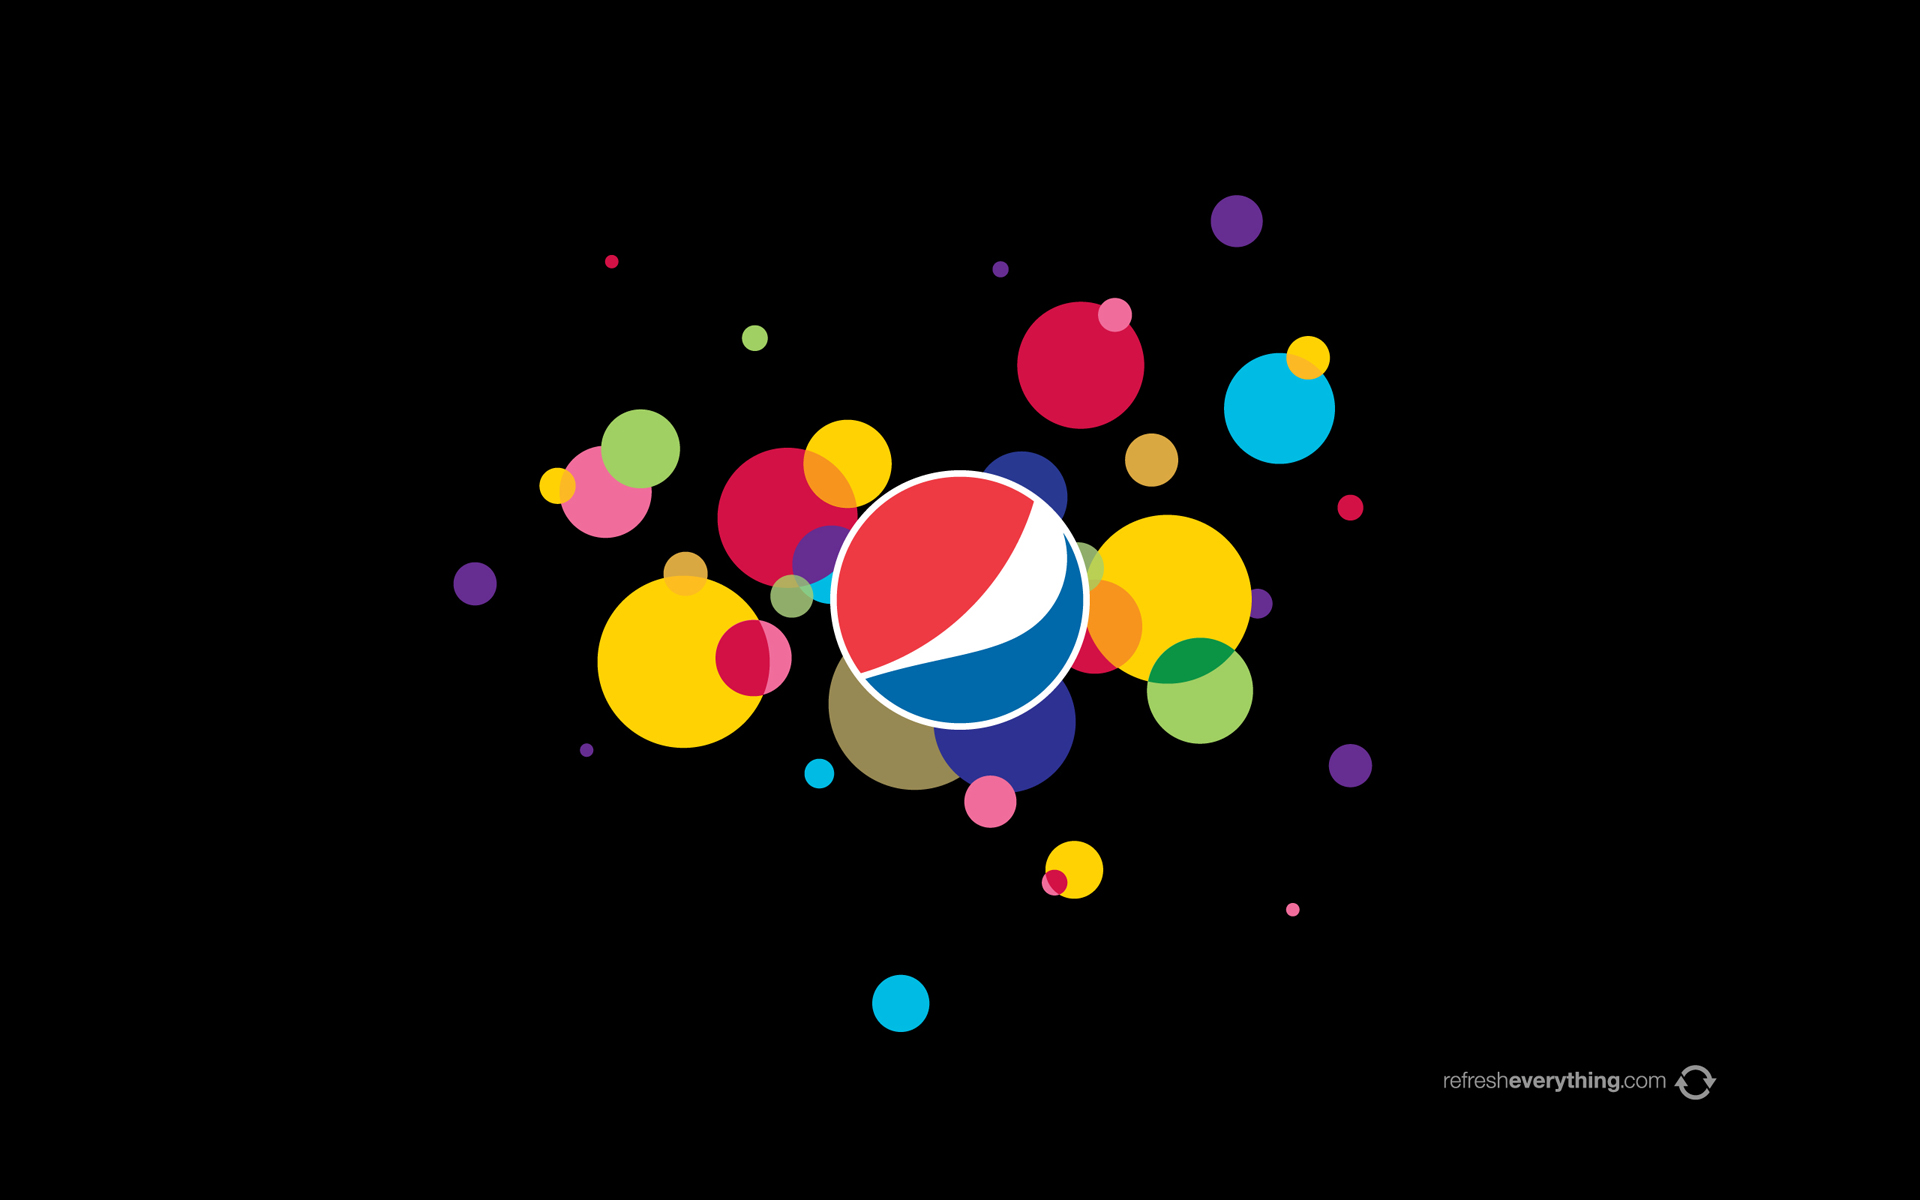 General 1920x1200 Pepsi Pepsi Max cola digital art simple background drink watermarked colorful circle shapes